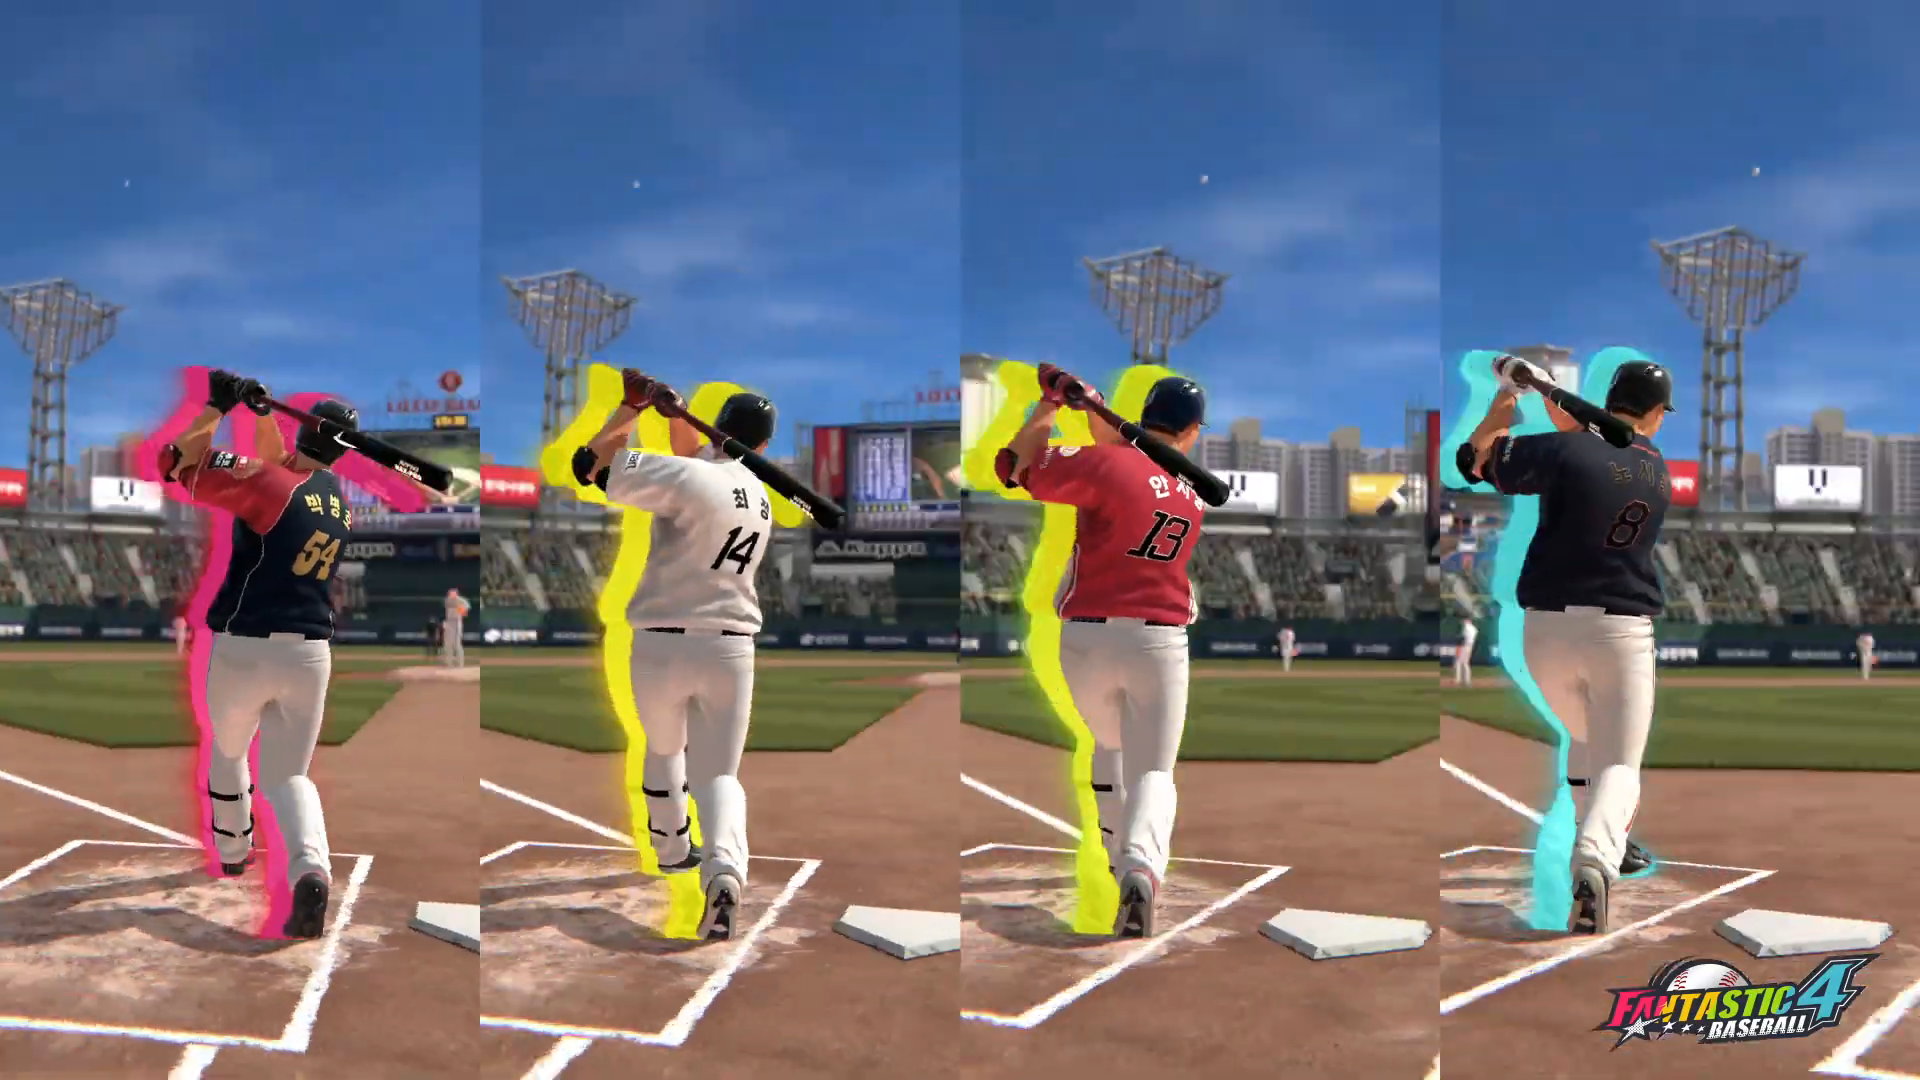 Screenshot 1 of Fantastic 4 Baseball 